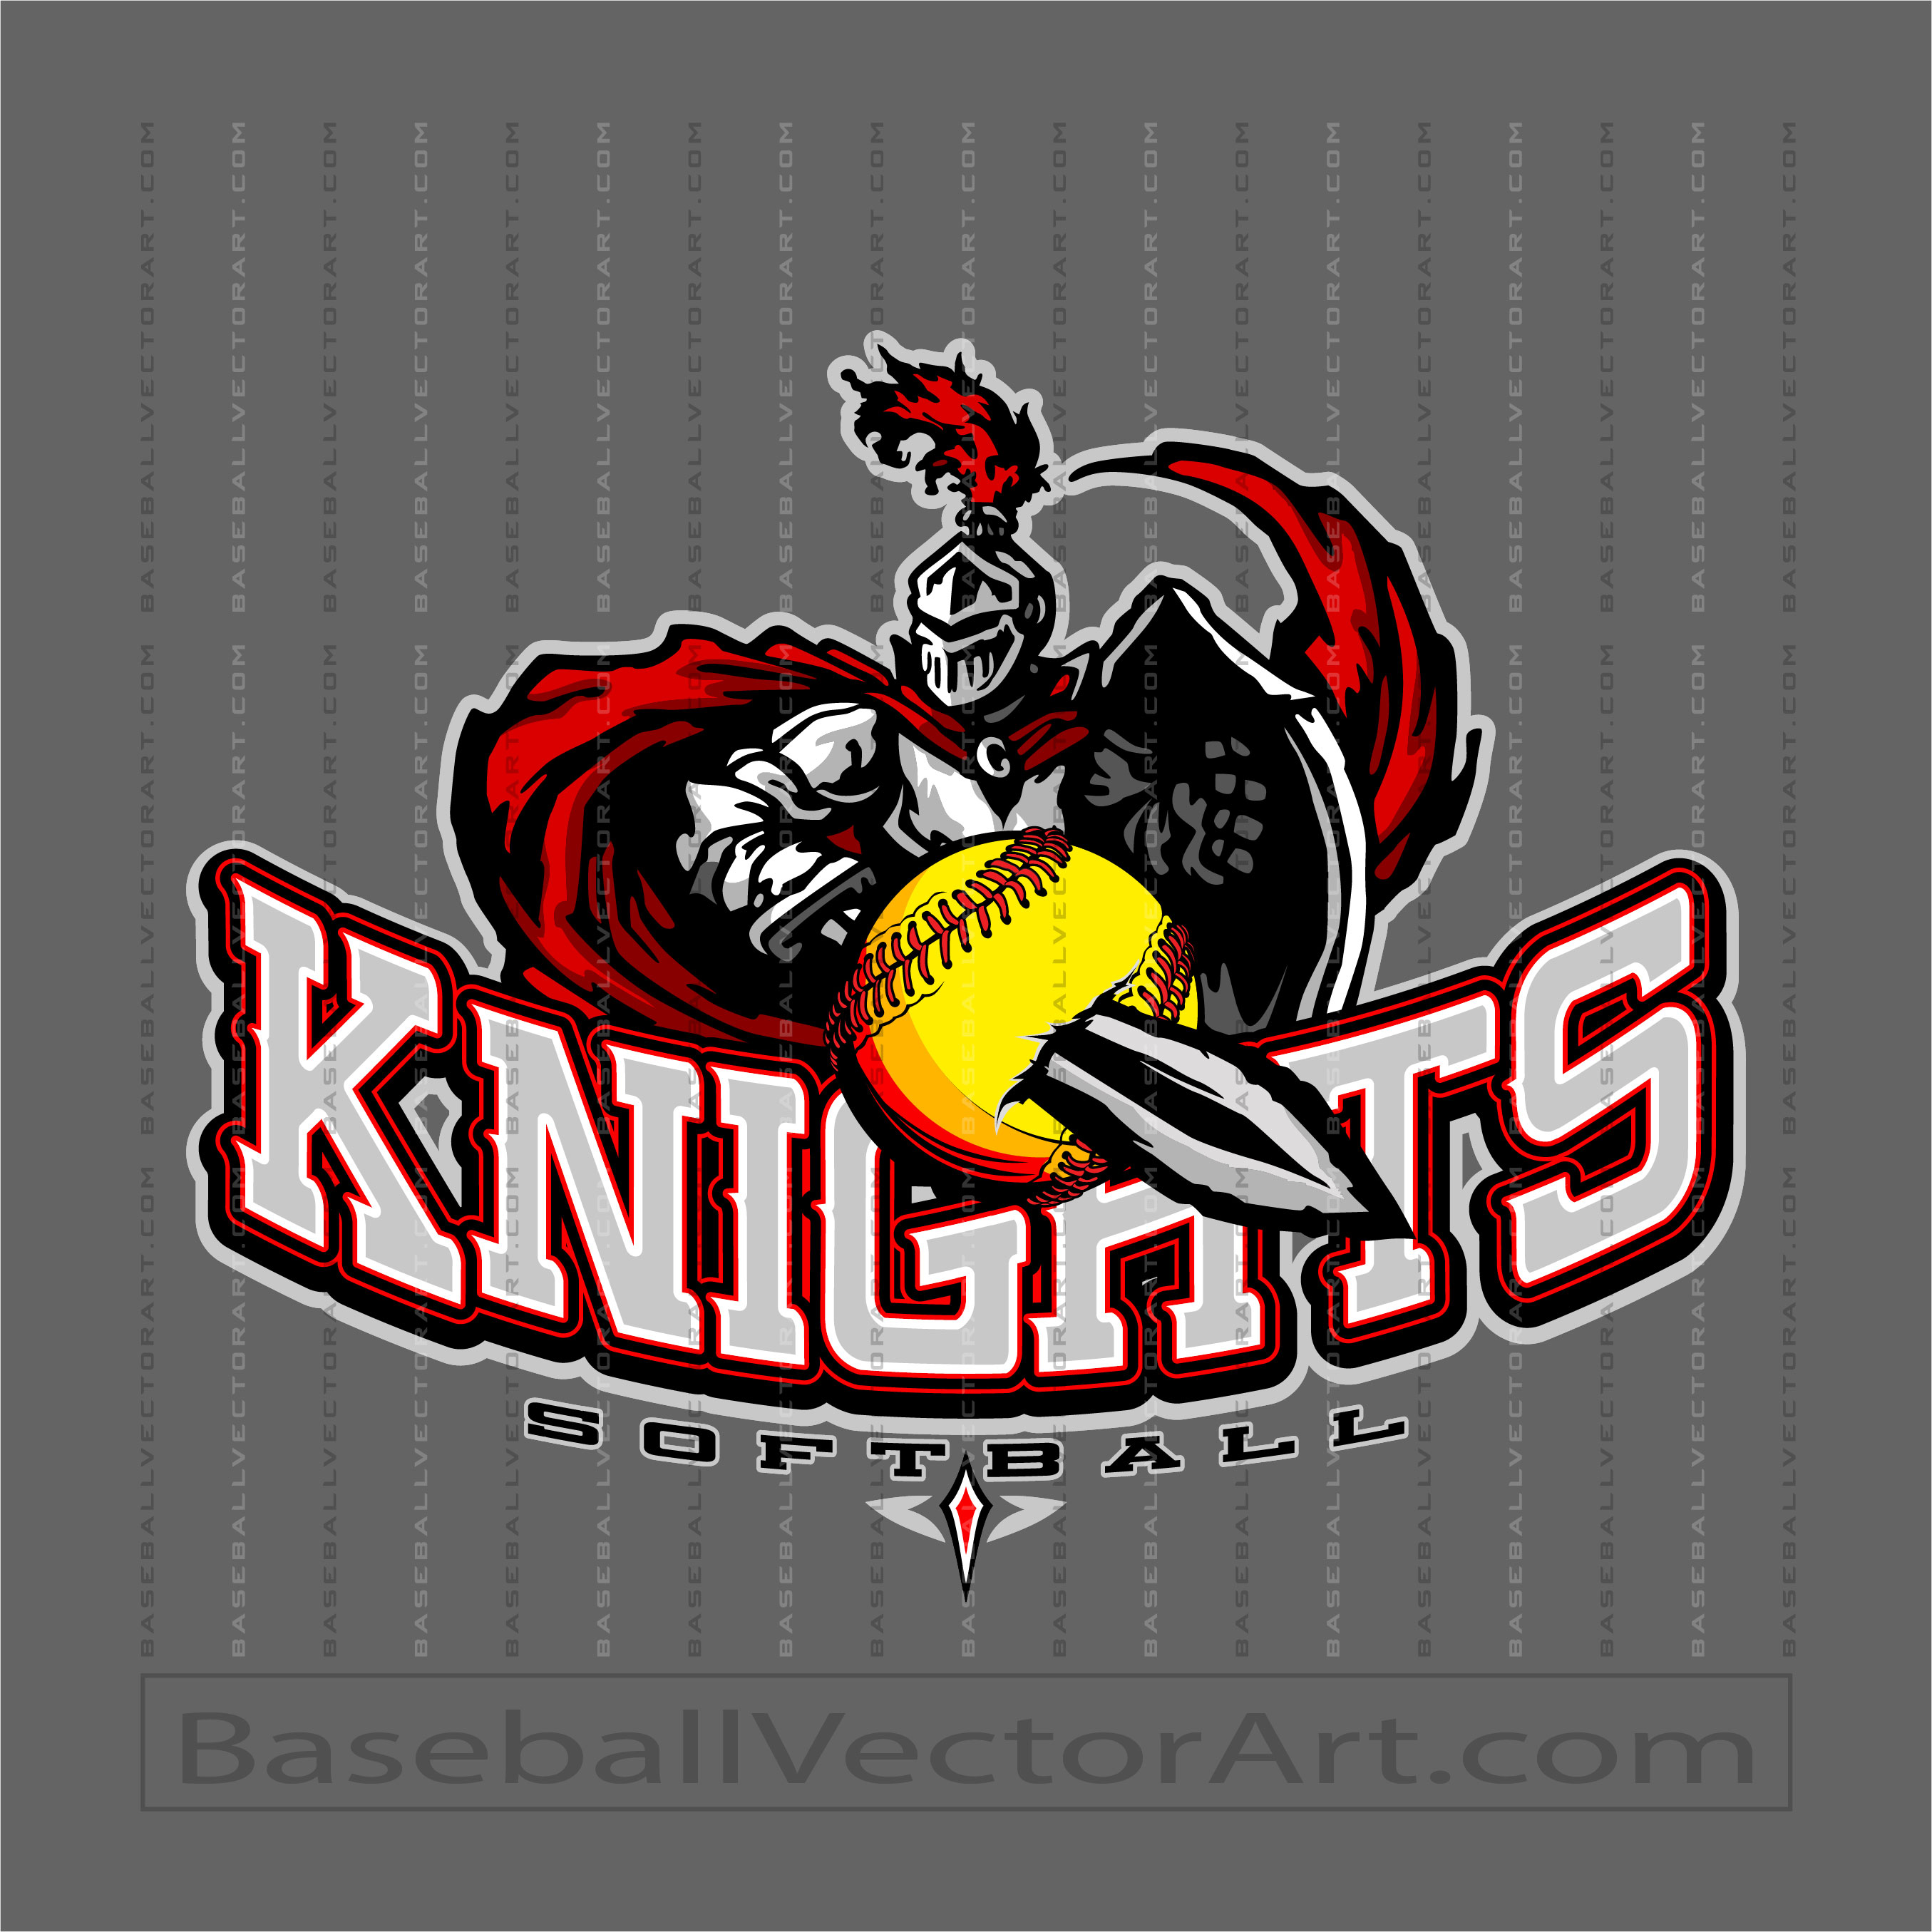 Knights Softball Pin Logo